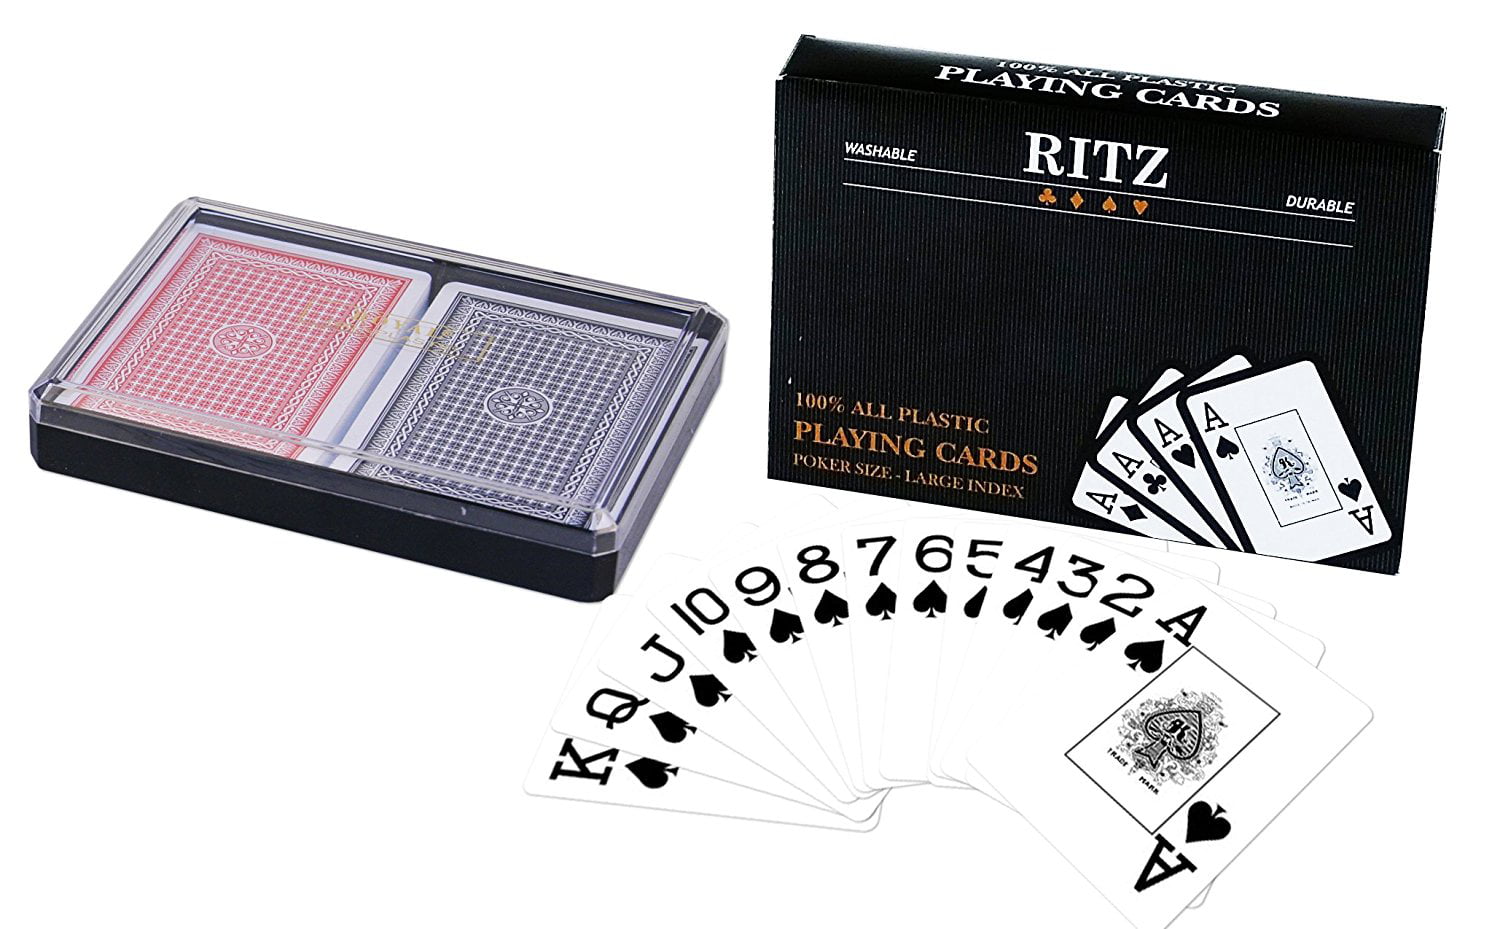 Da Vinci Persiano Italian 100% Plastic Playing Cards 2-deck Set.. Free Shipping 